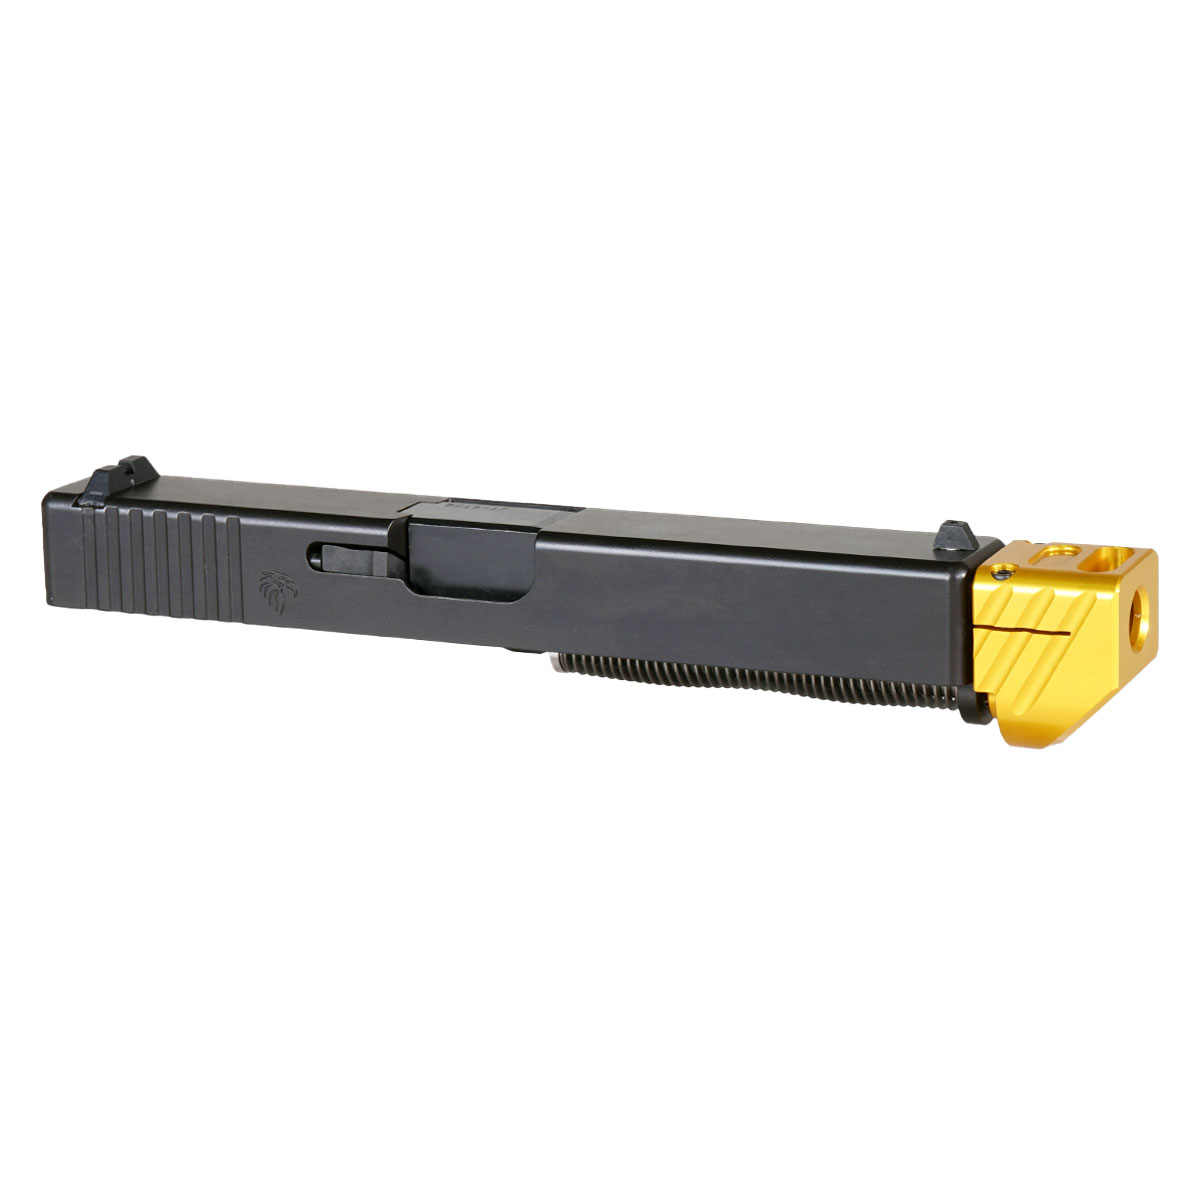 DTT 'Boomerango V2 w/ Gold Compensator' 9mm Complete Slide Kit - Glock 17 Gen 1-3 Compatible